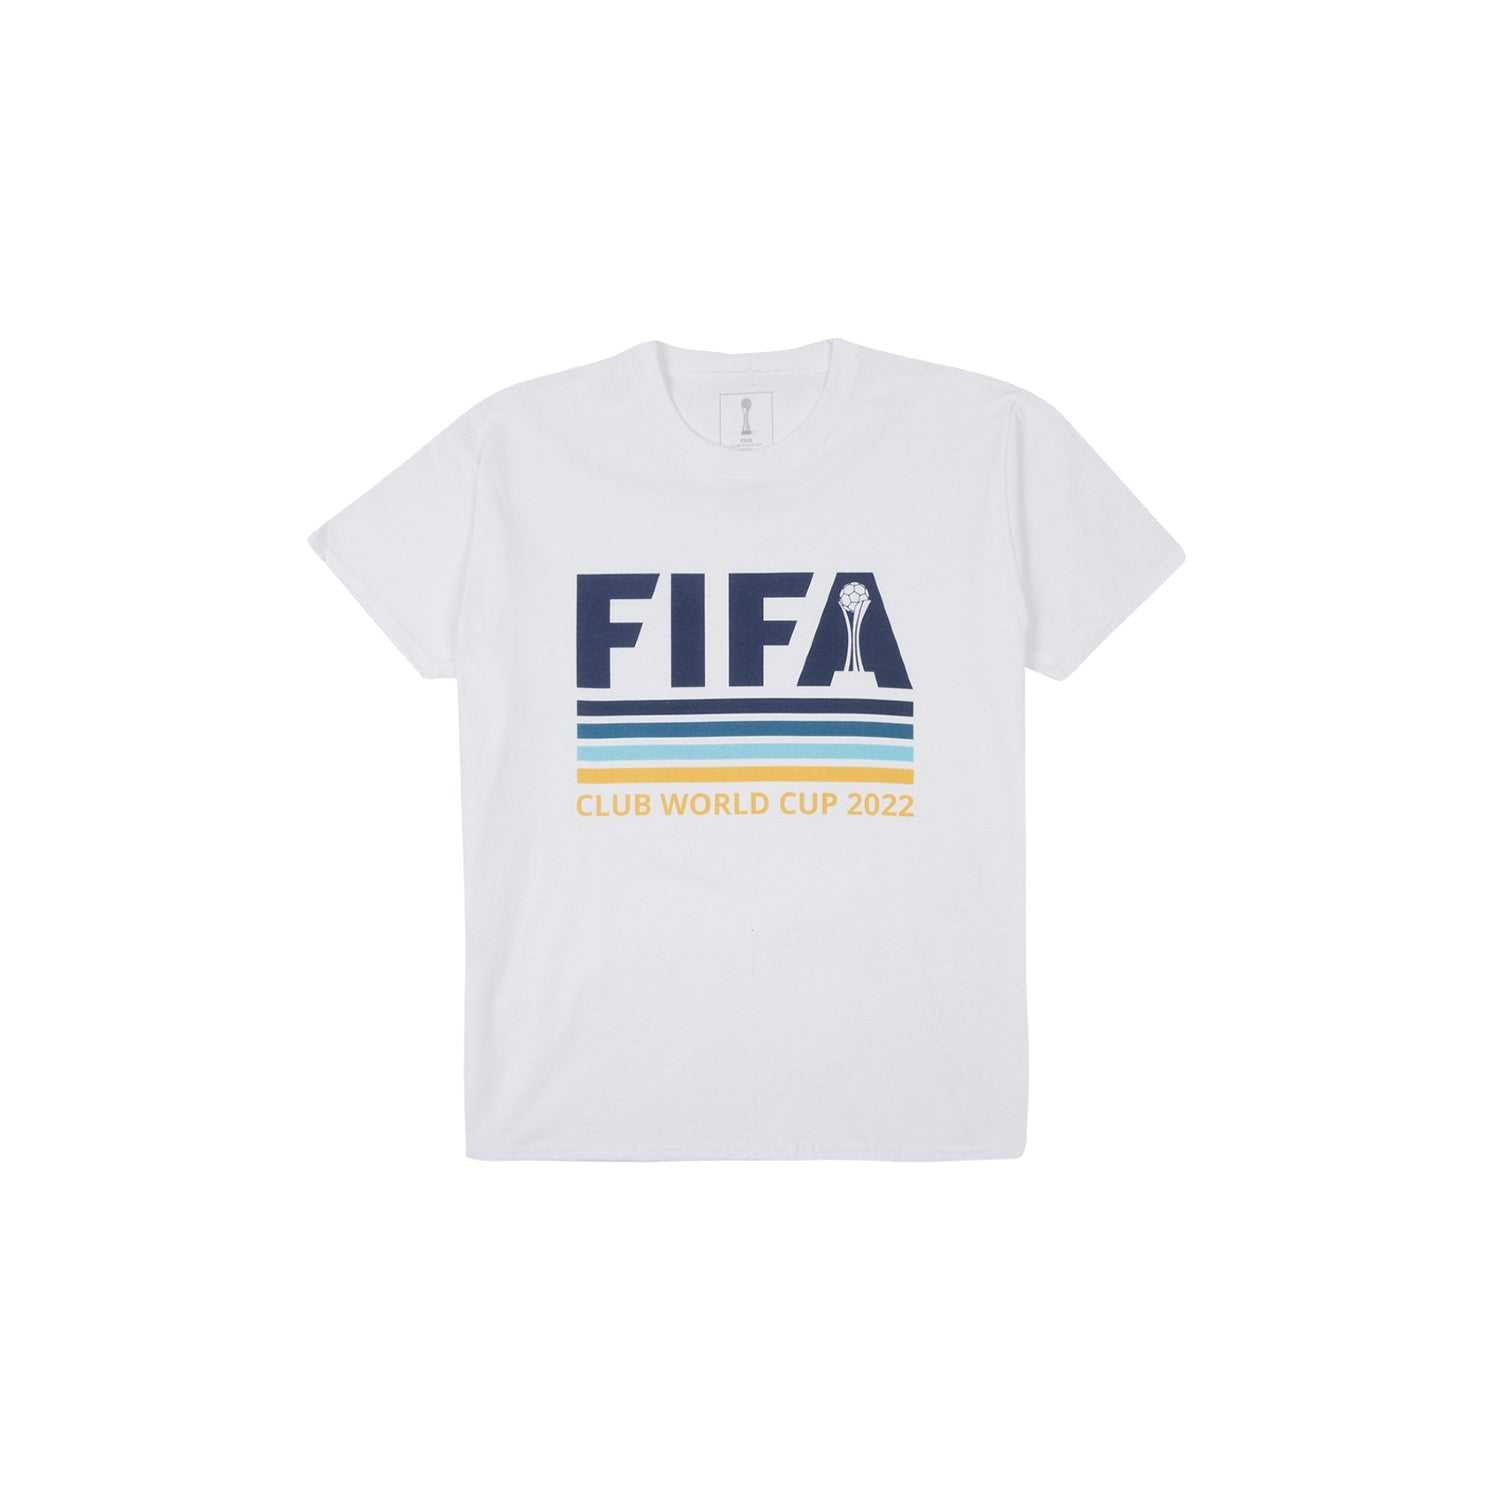 FIFA Club World Cup 2022 Grey T-Shirt - Youths